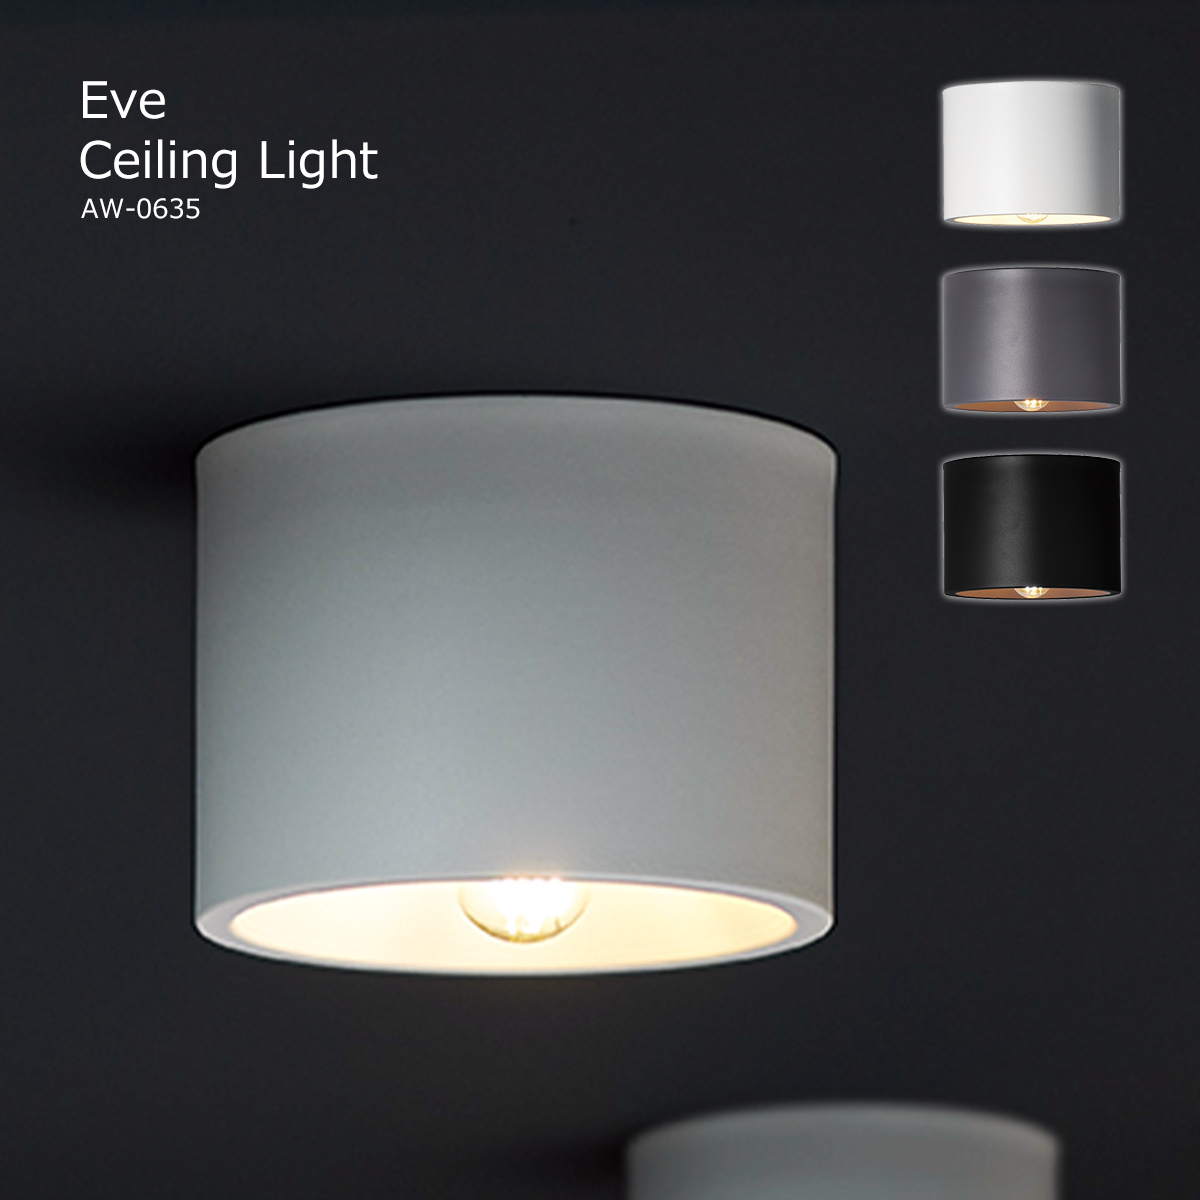 Eve シーリングライト コンパクト ダウンライト ライト LED ホワイト